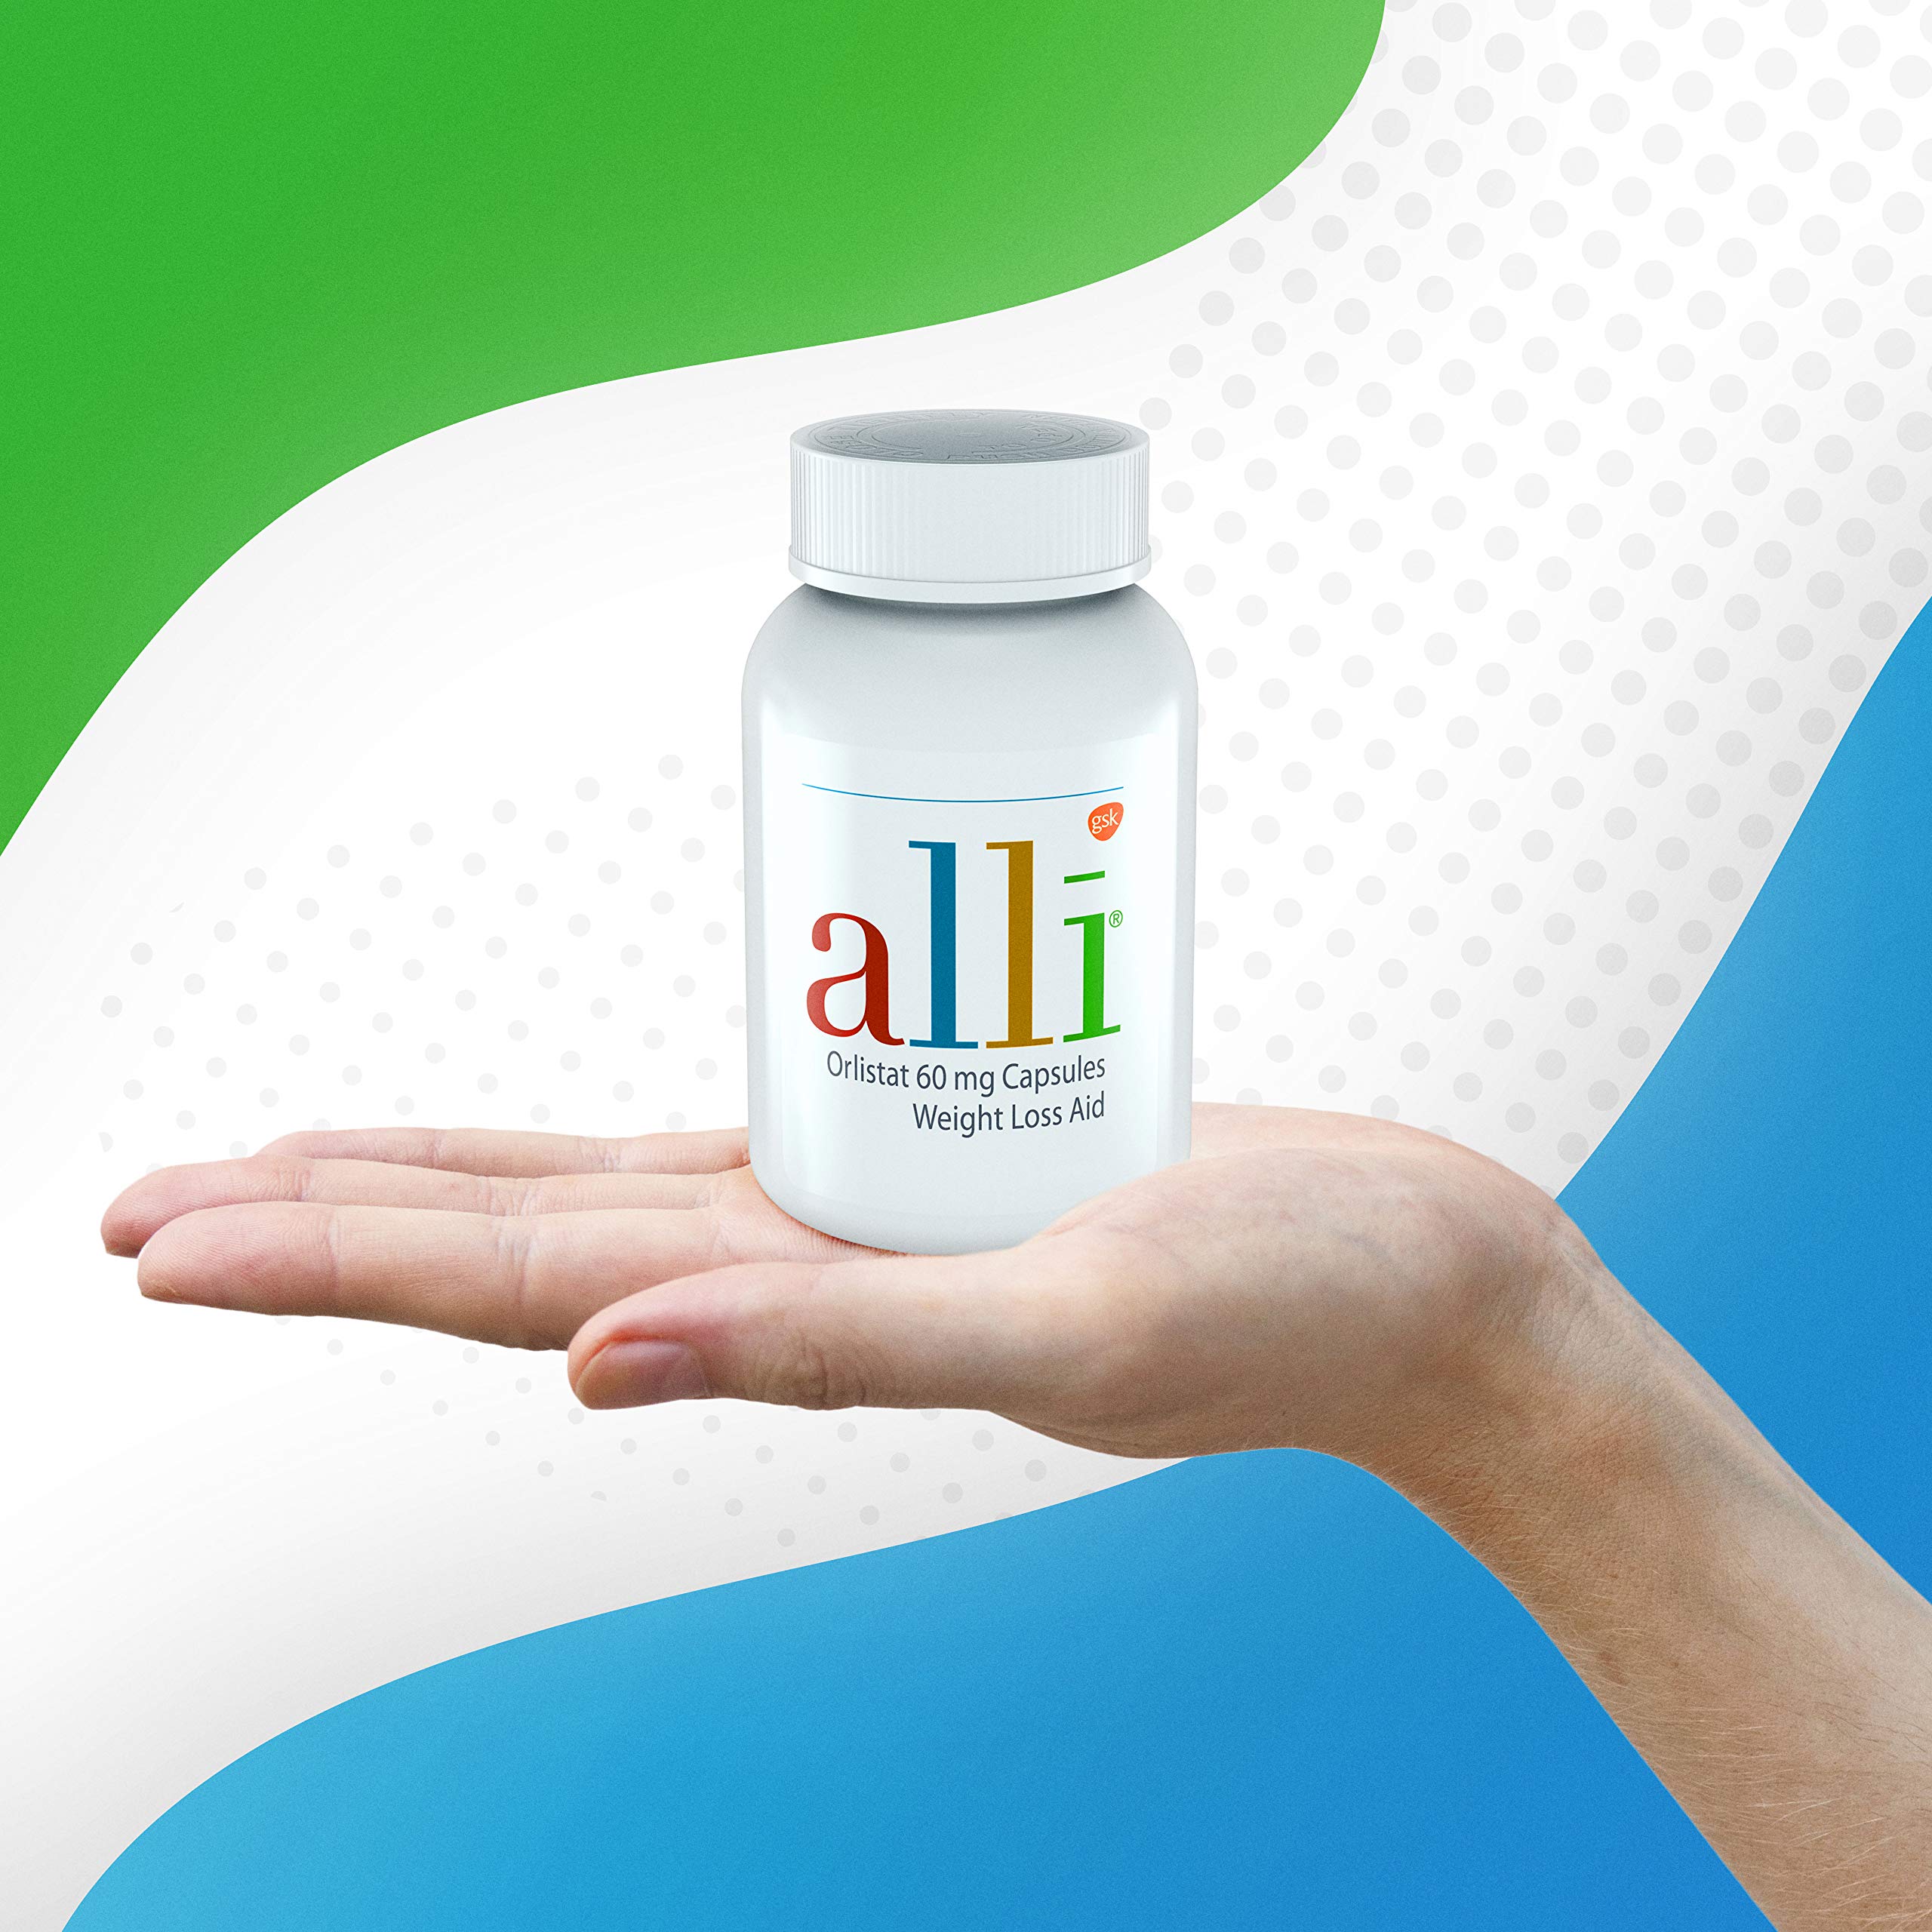 Do Alli Weight Loss Pills (Orlistat) Work? An Evidence-Based Review